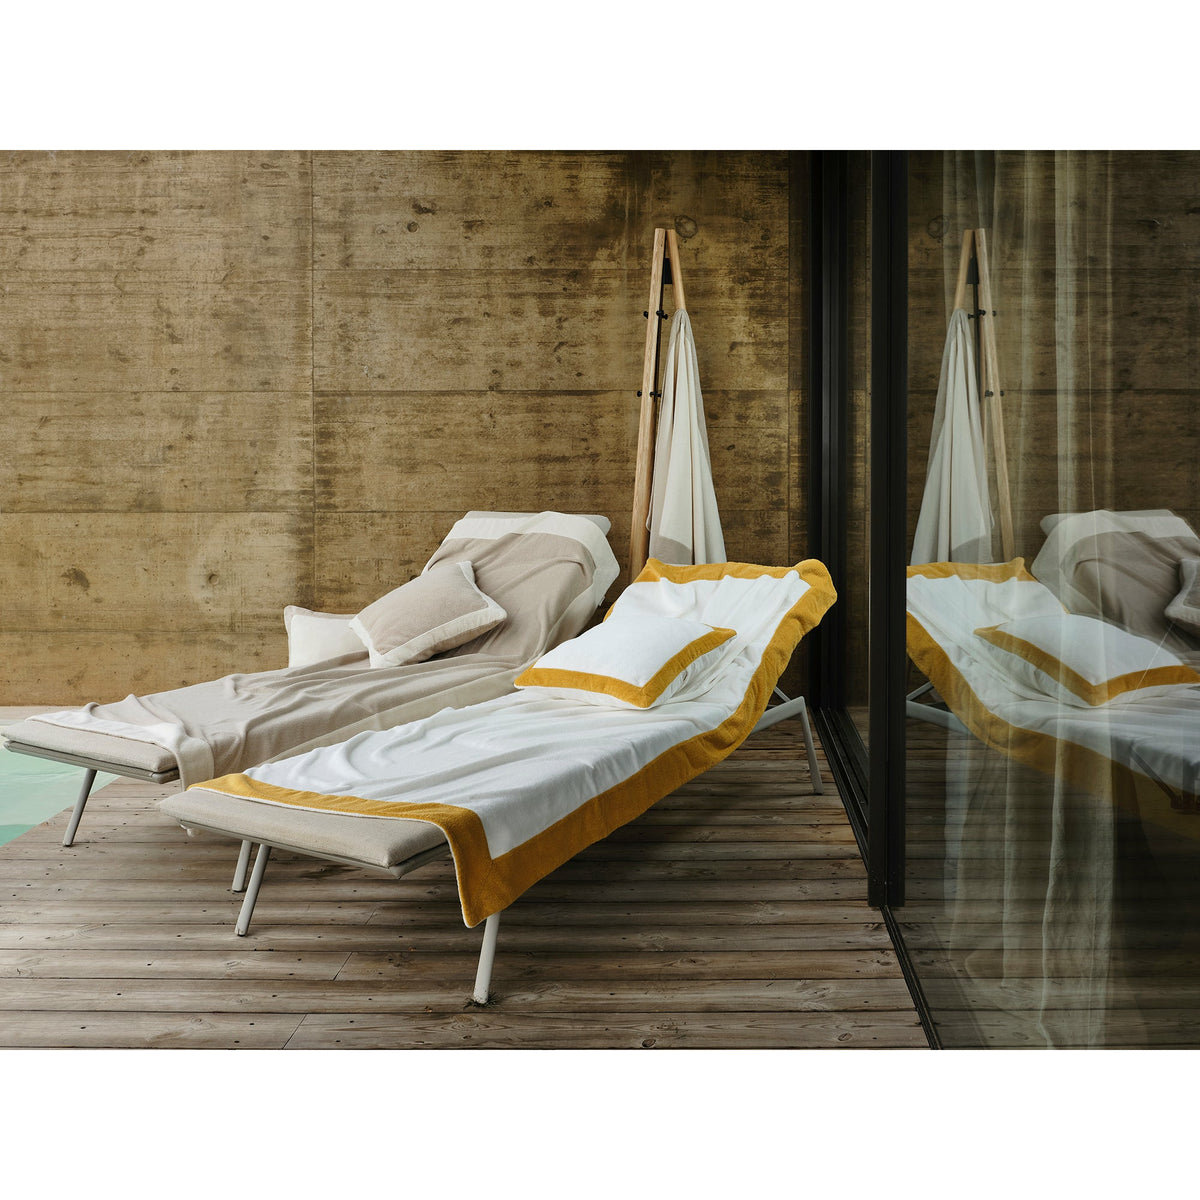 Abyss Portofino Beach Towels Portugal Lifestyle Fine Linens